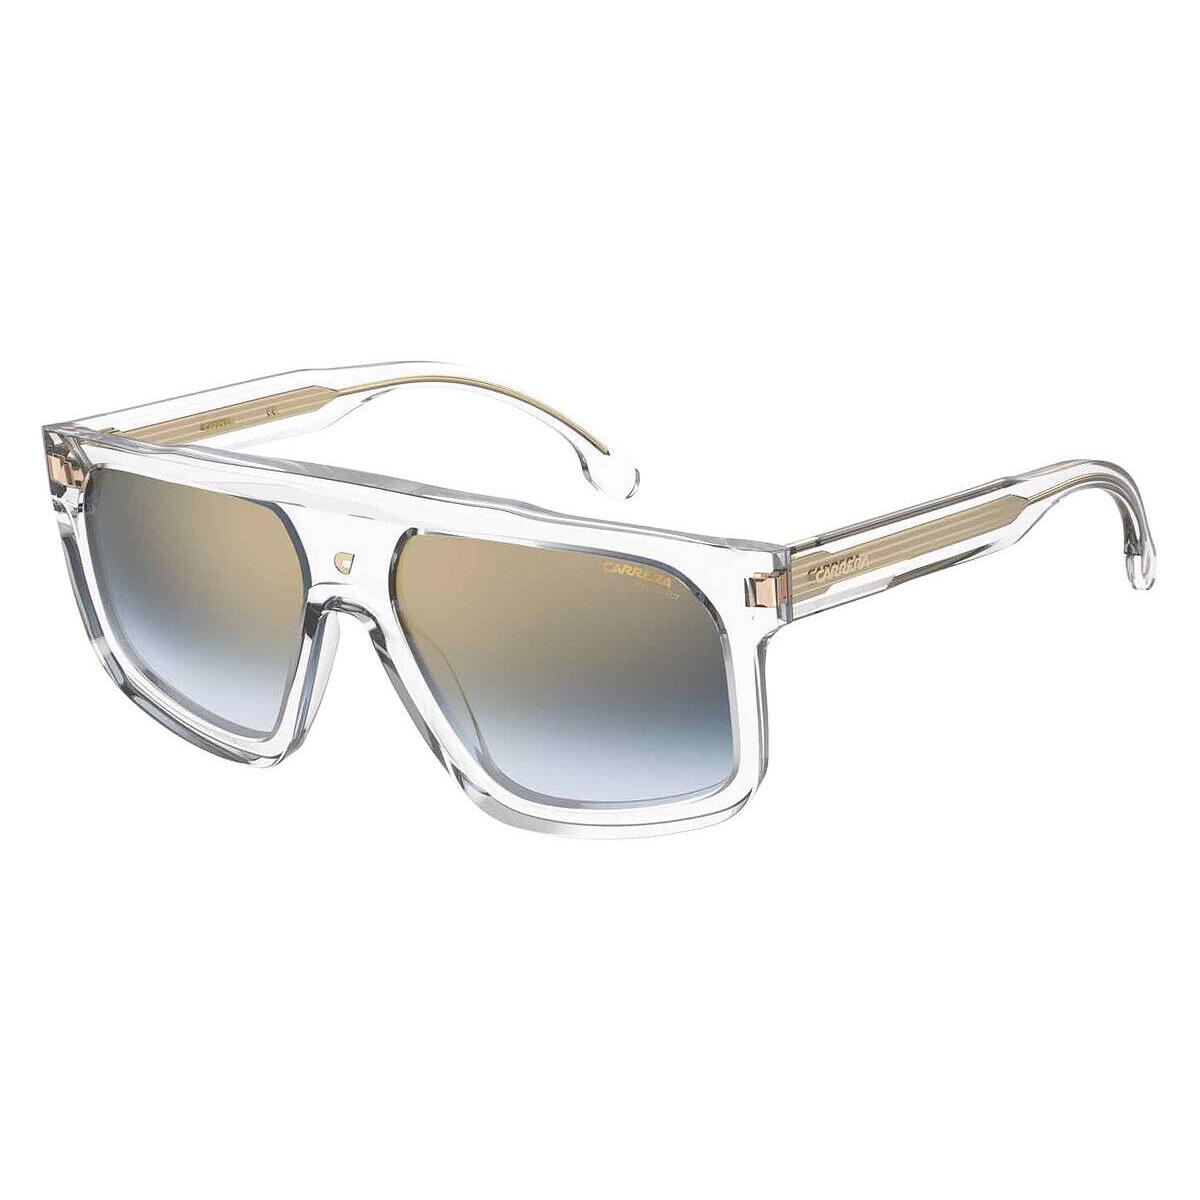 Carrera Car Sunglasses Unisex Crystal / Blue SF Gold SP 59mm